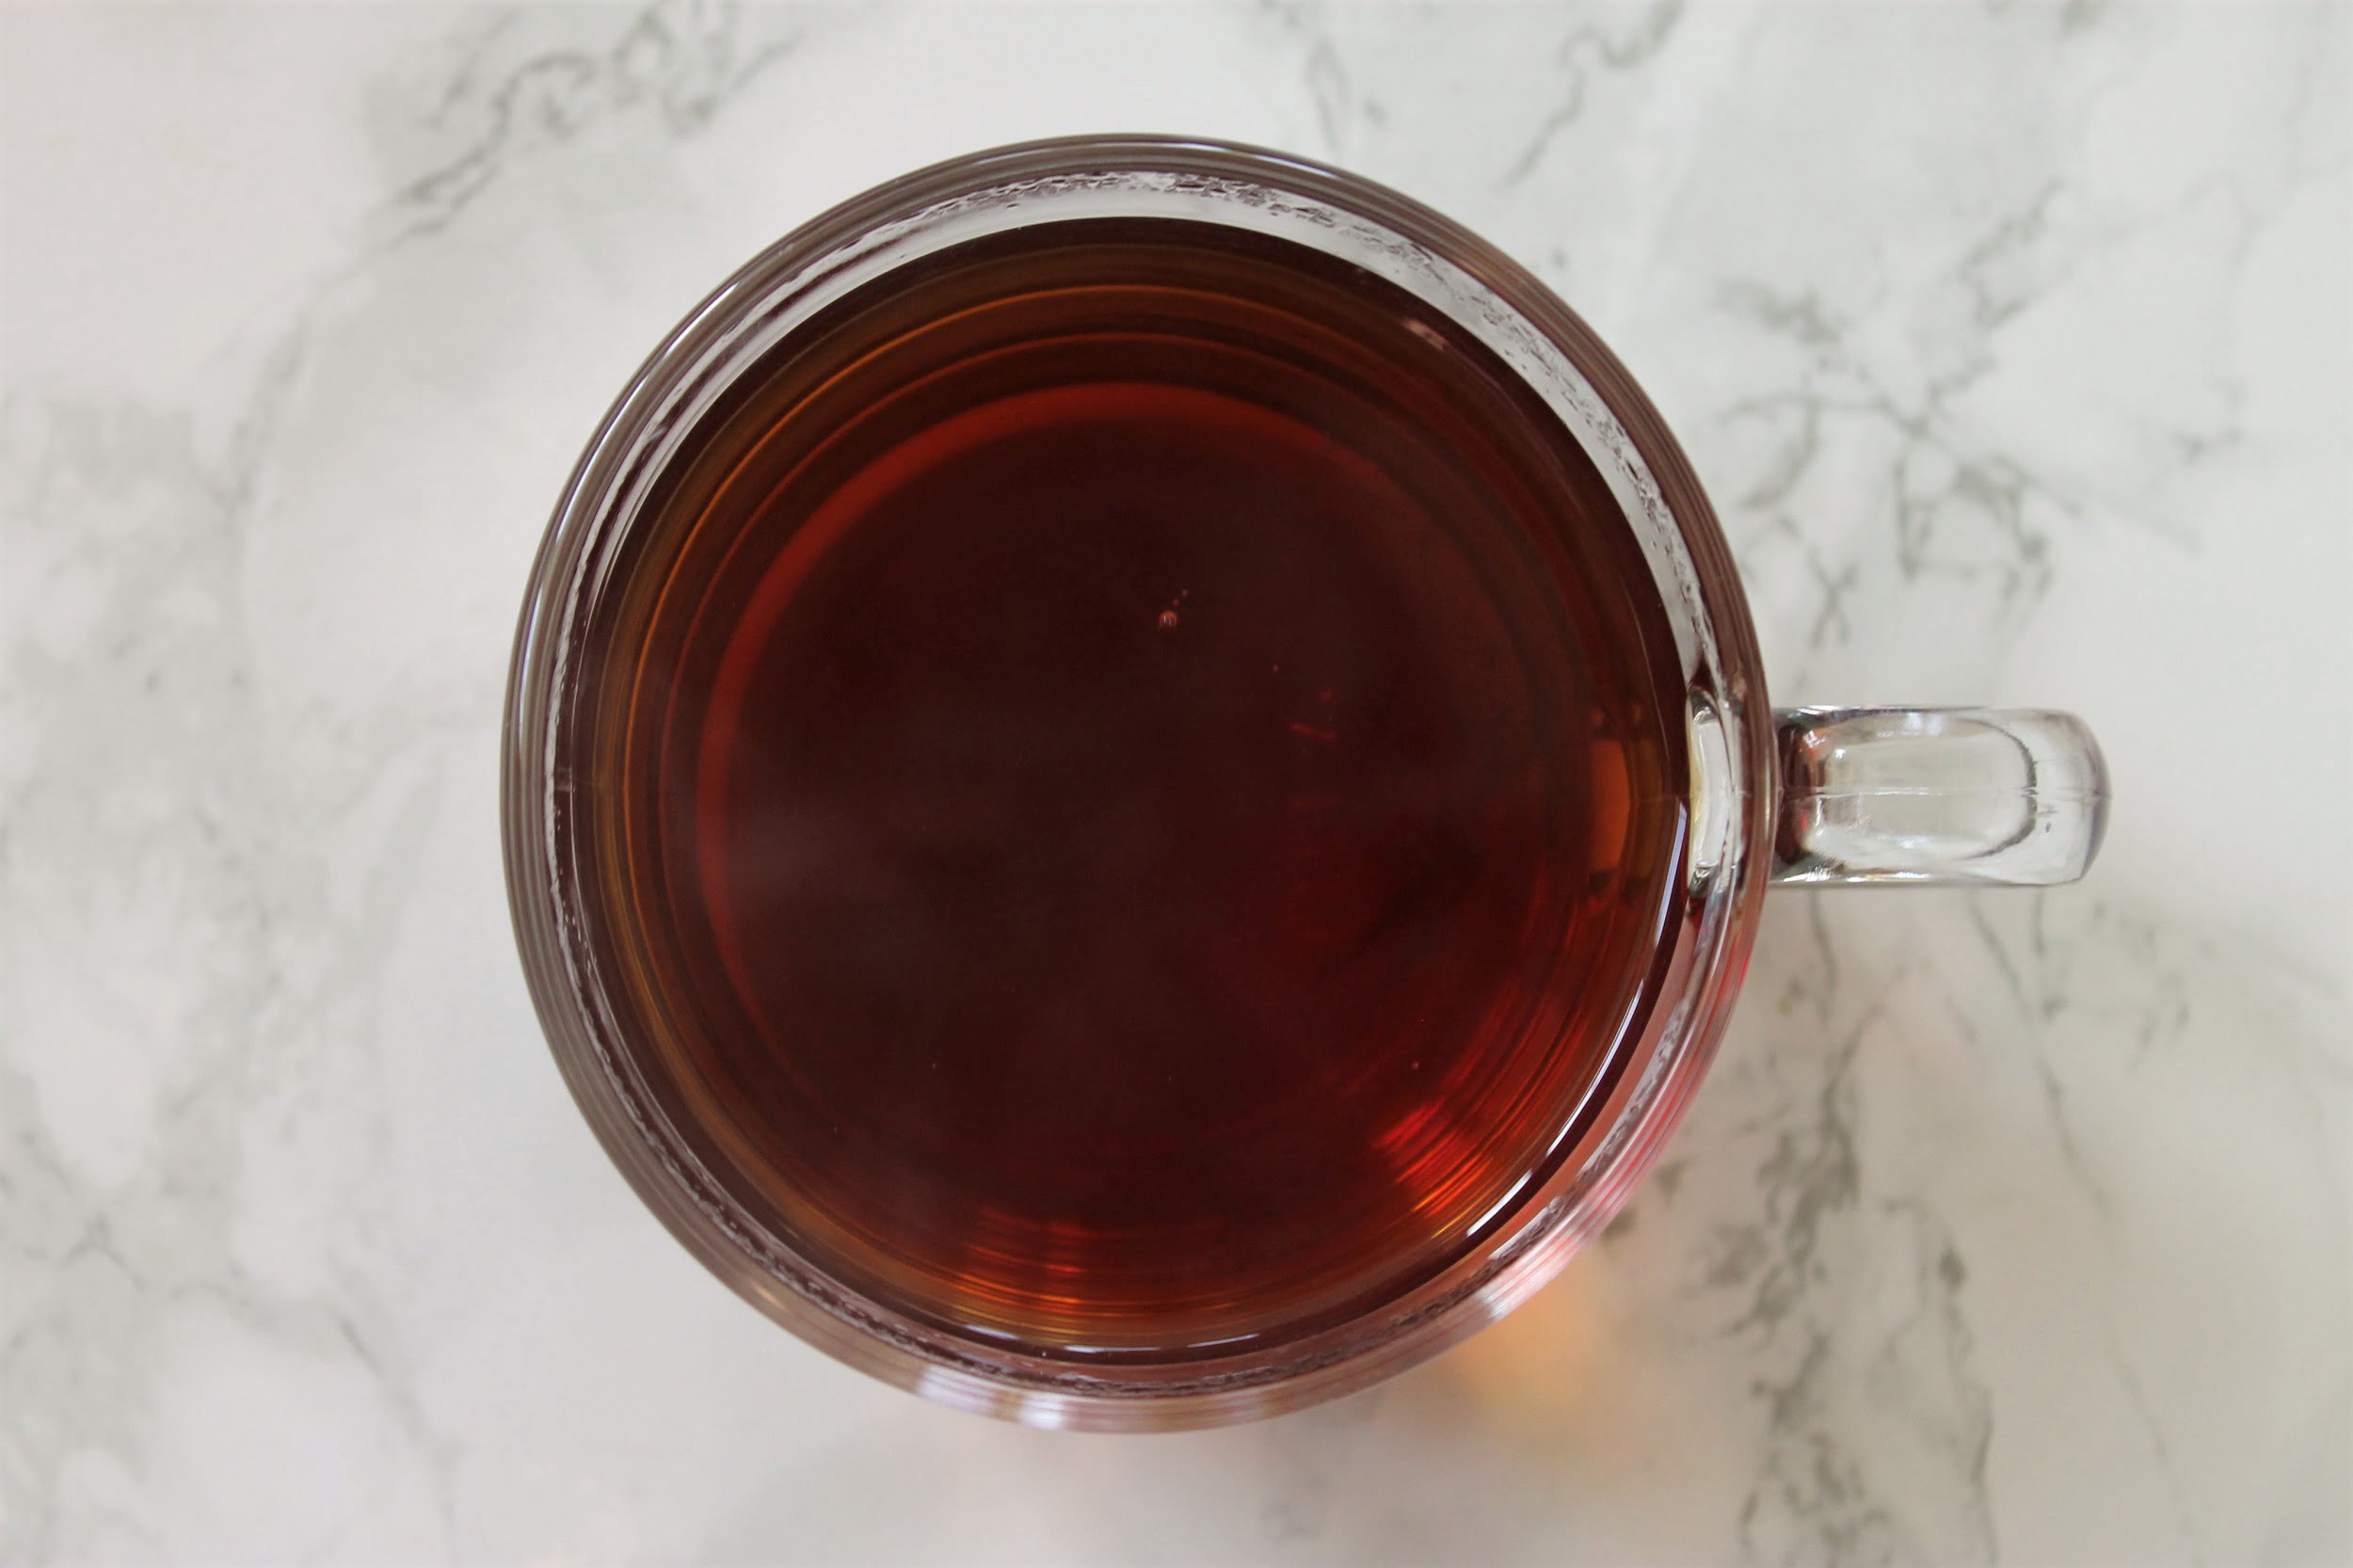 amber black tea in glass teacup